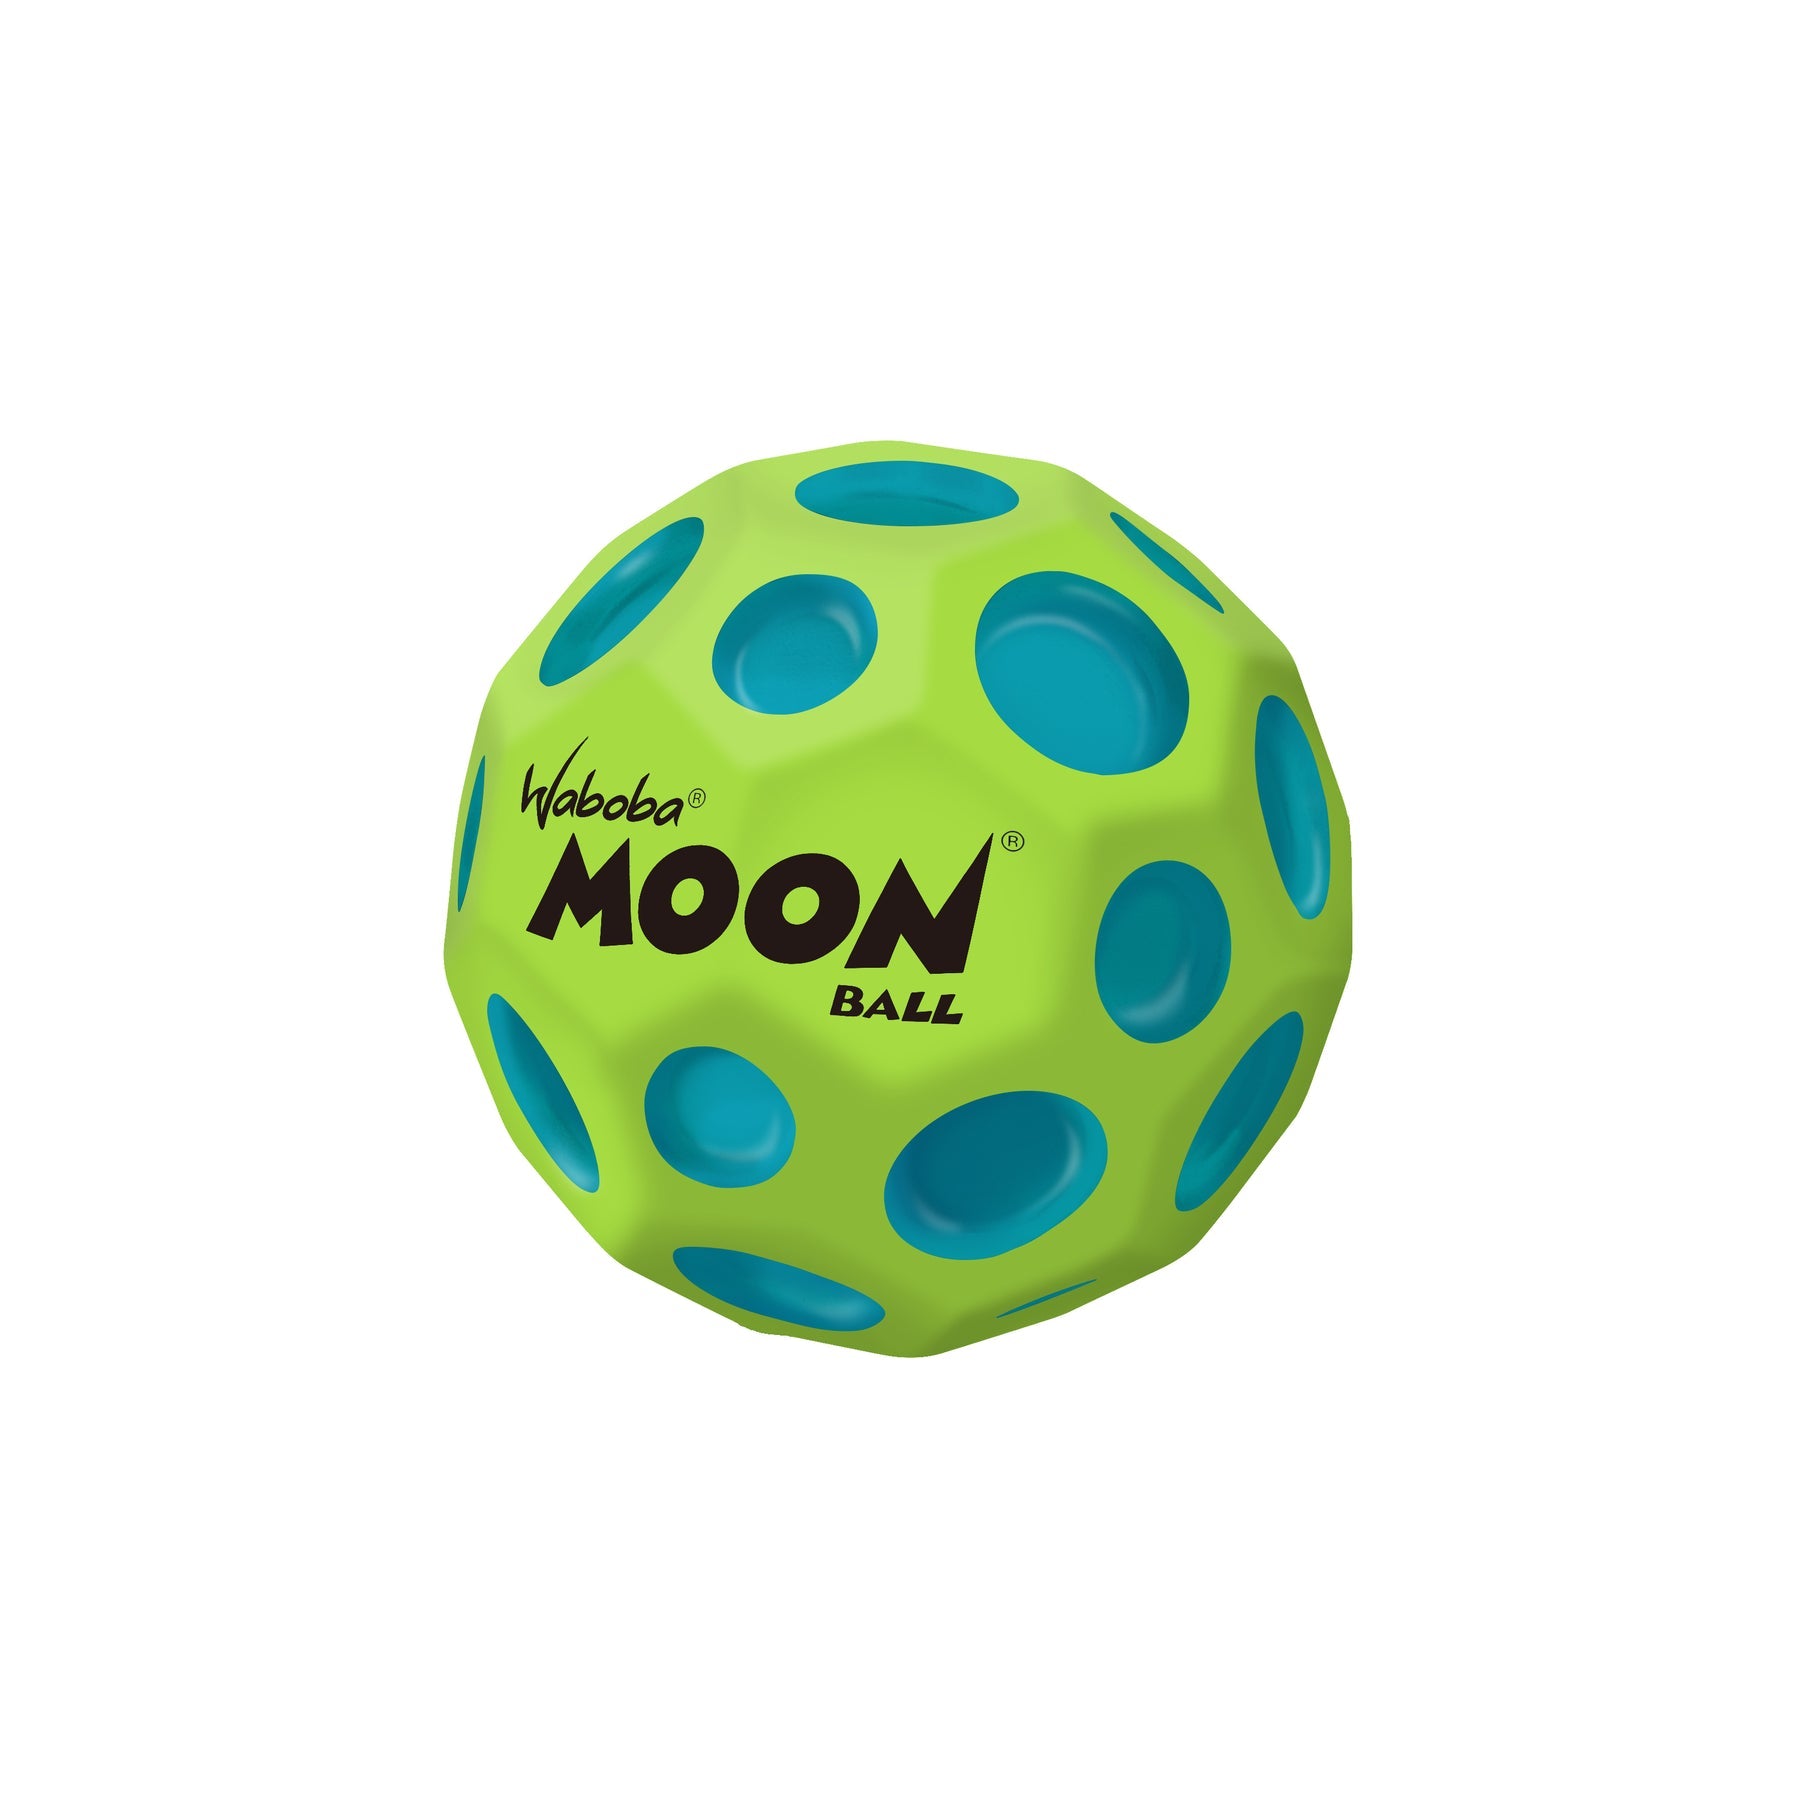 Waboba - MOON Ball "Martian"